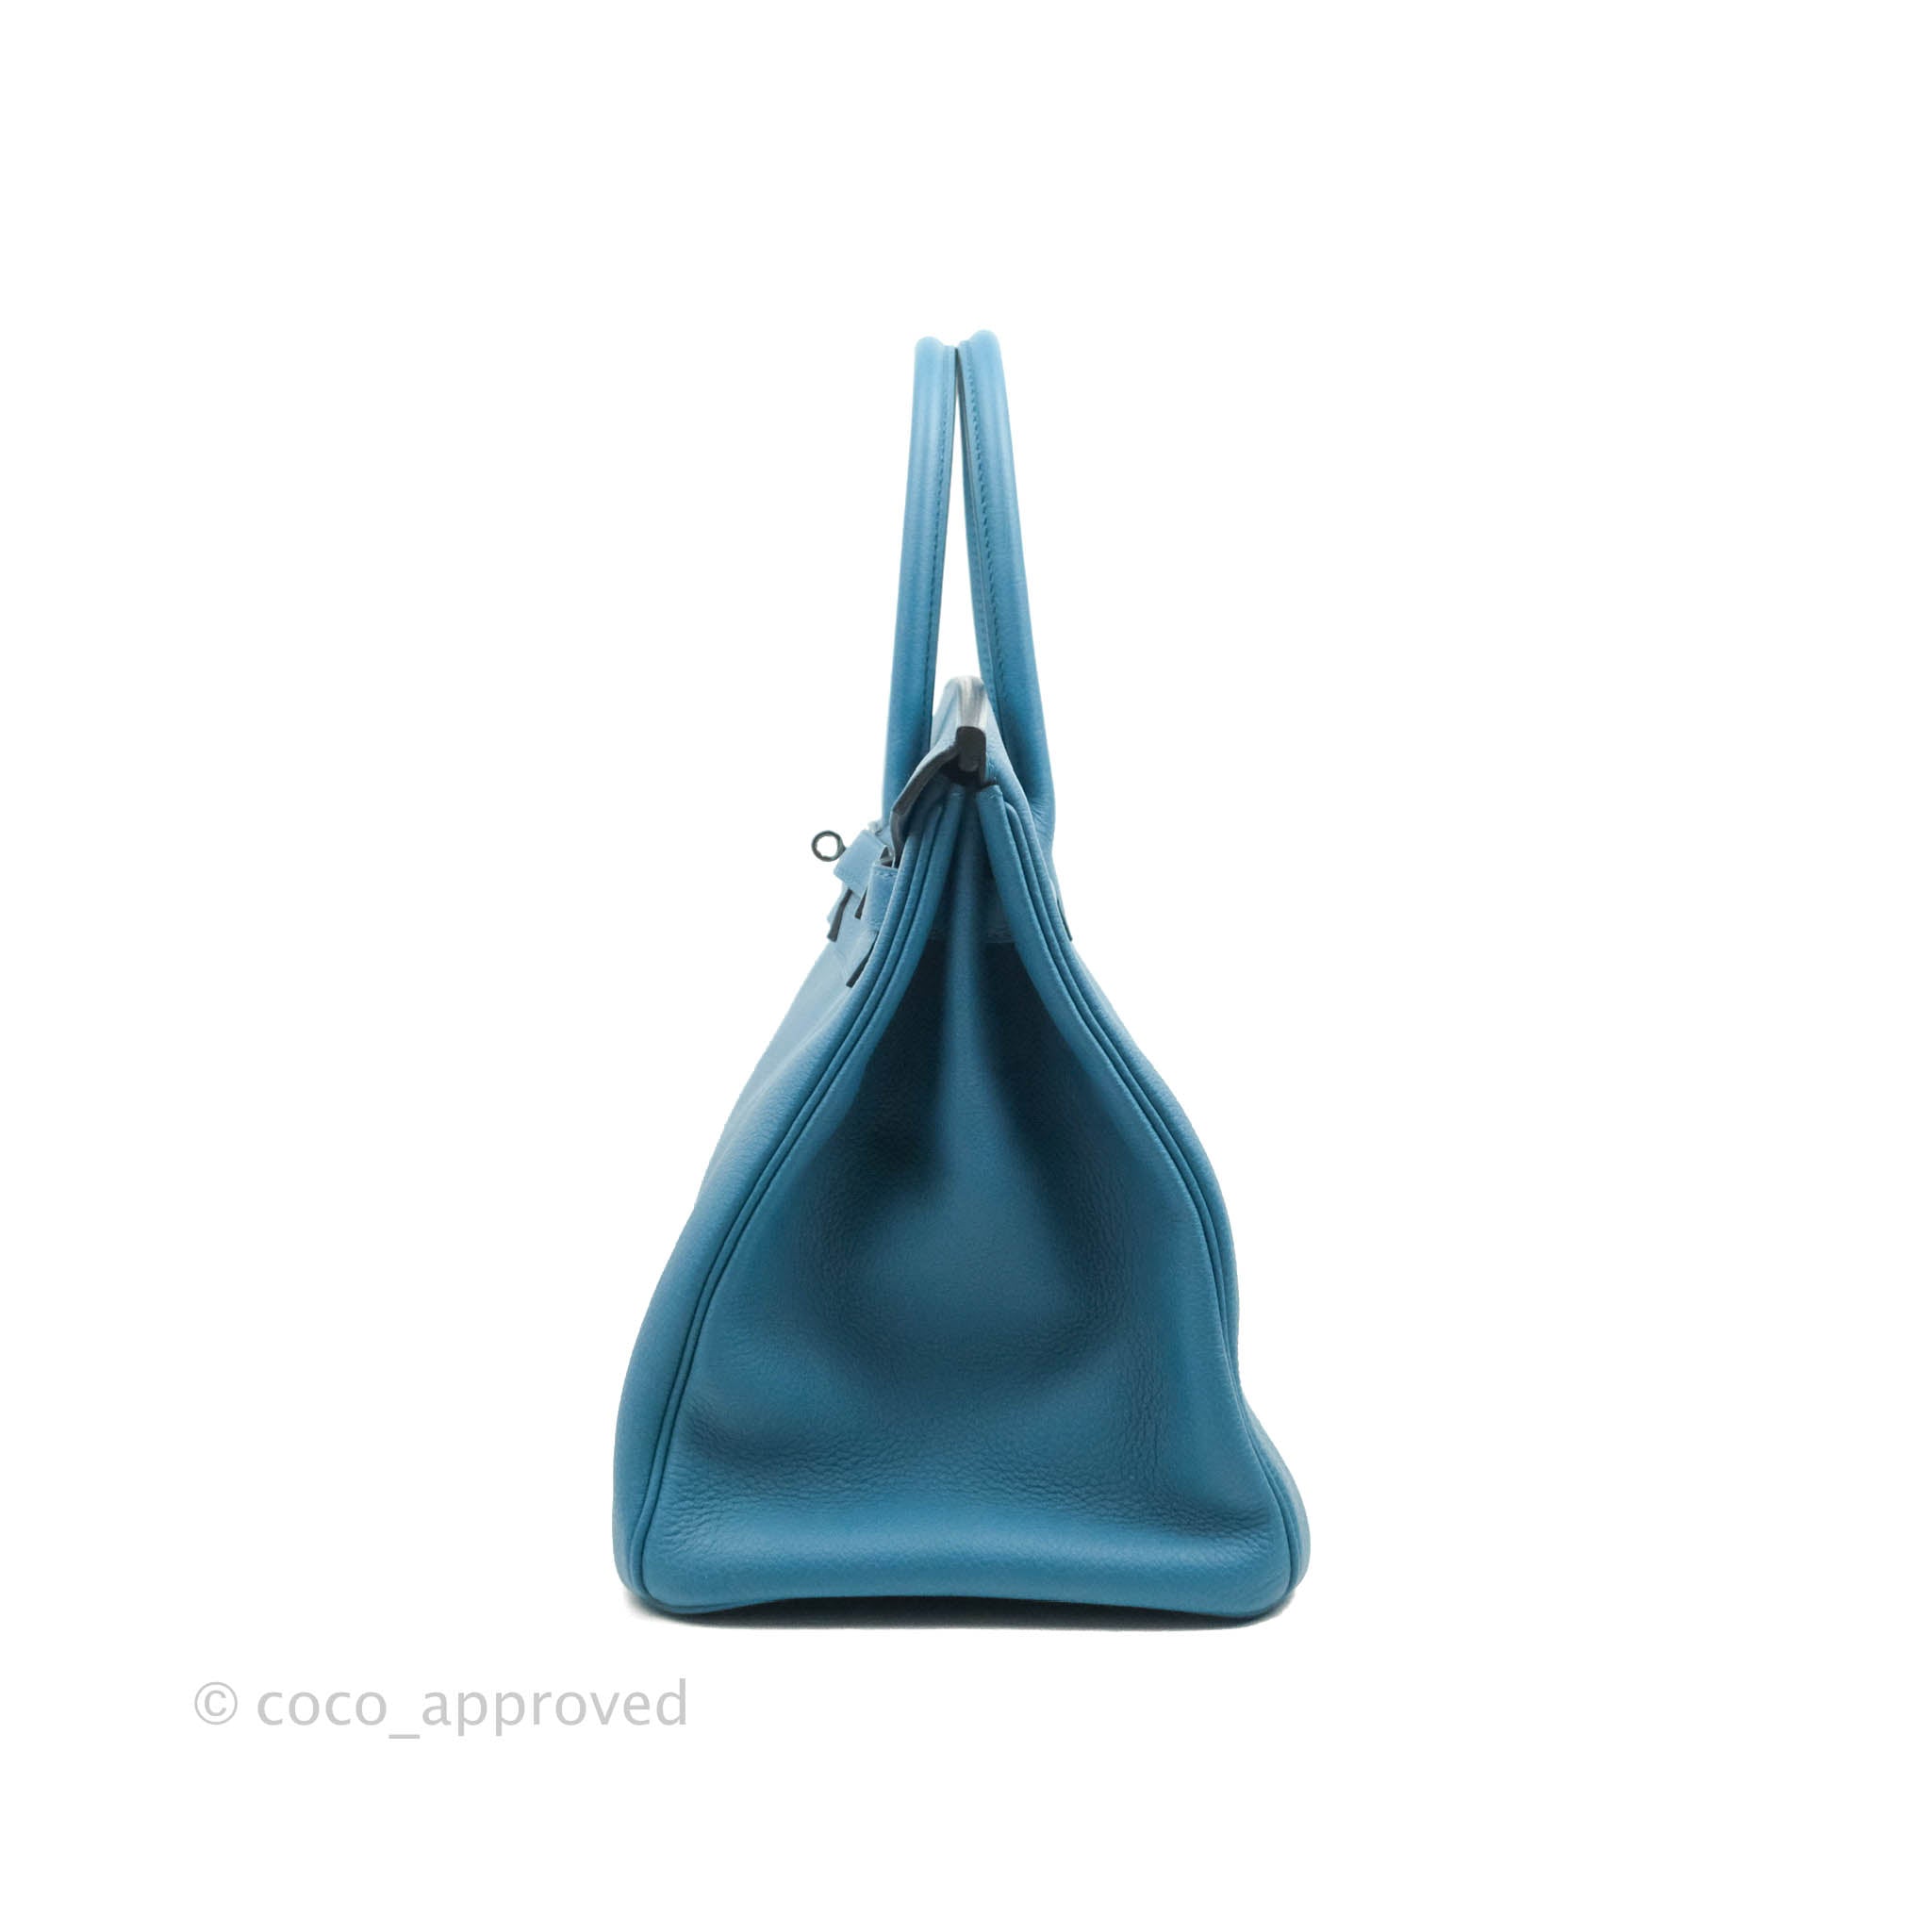 Hermes Birkin Bag, Blue Cobalt, 35cm, Fjord with palladium